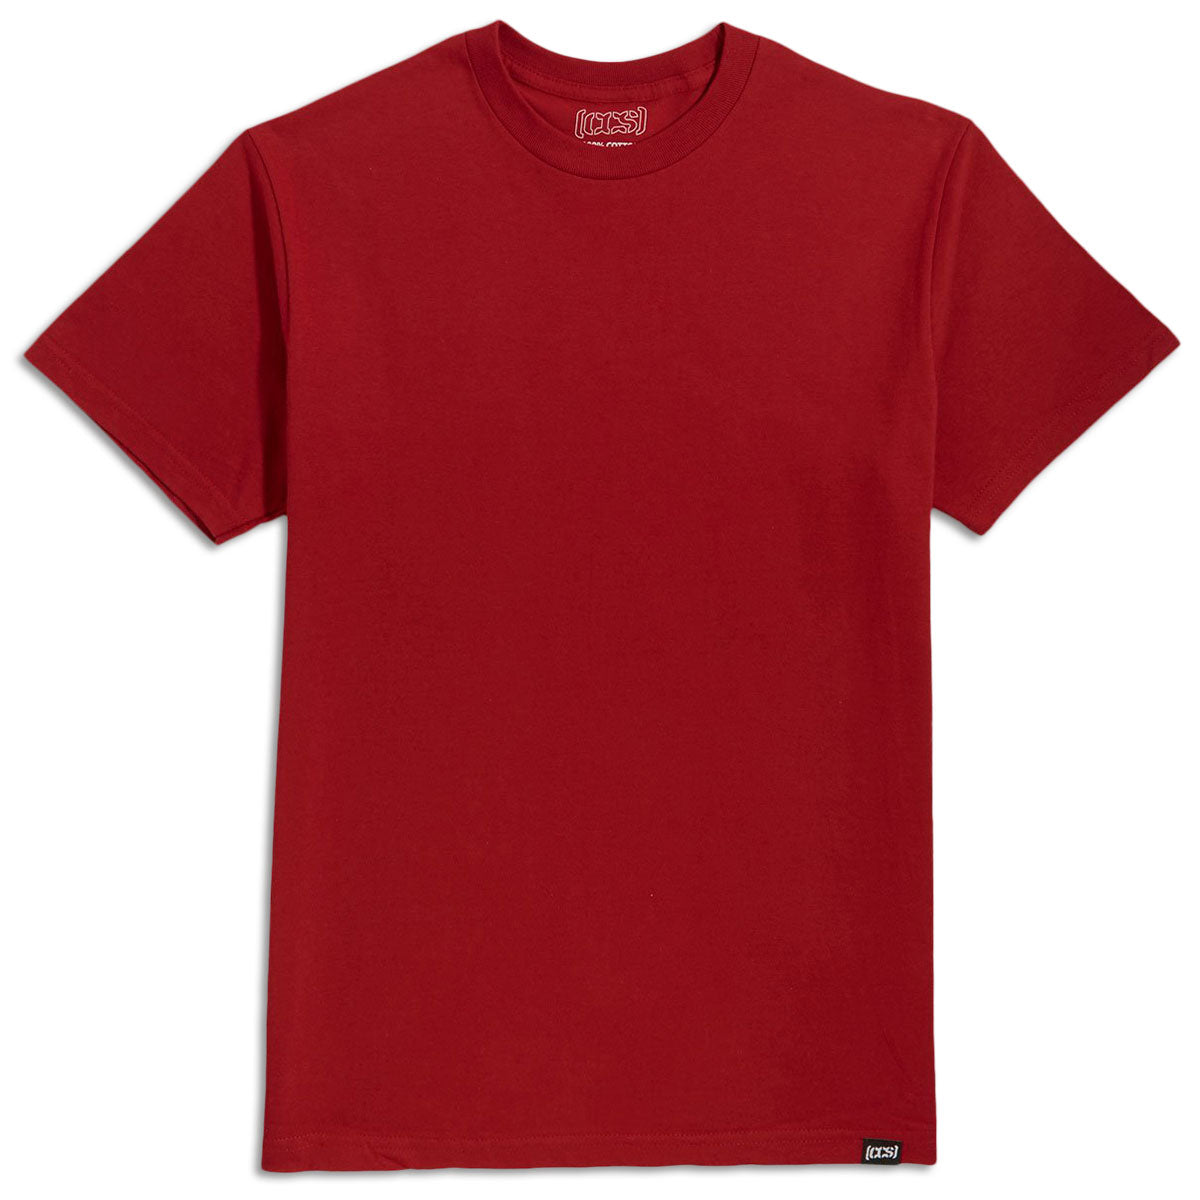 CCS Original Heavyweight T-Shirt - Red image 1